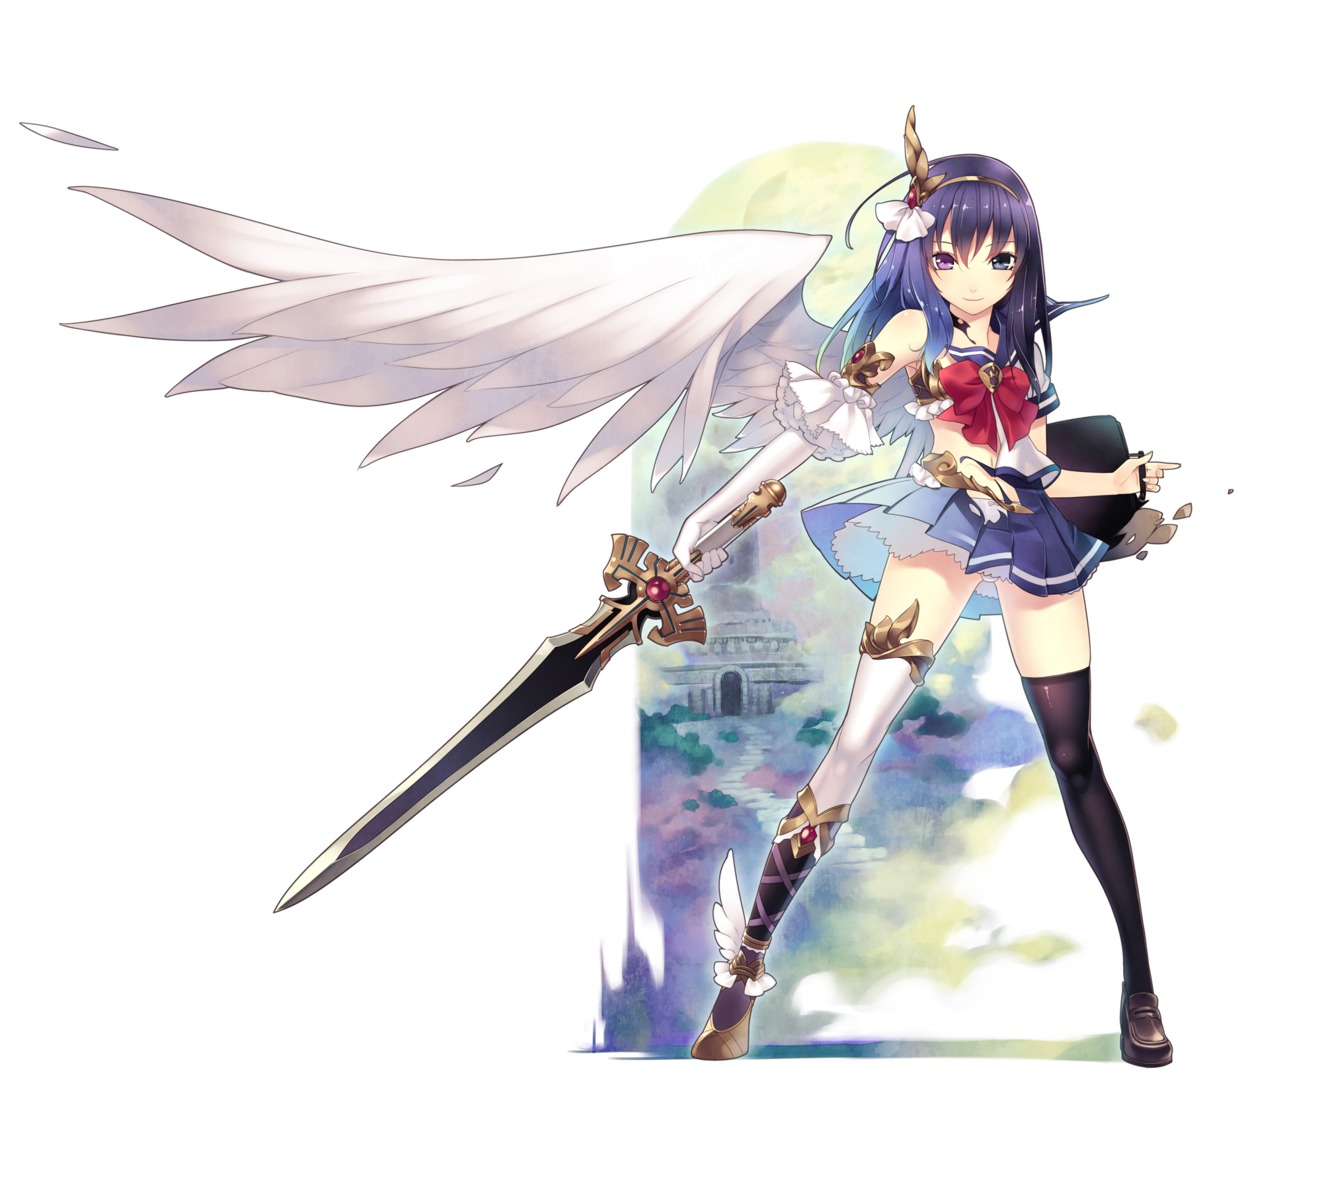 angel heterochromia hirano_katsuyuki pantsu seifuku sword thighhighs valis_kokkyou_keibitai wings